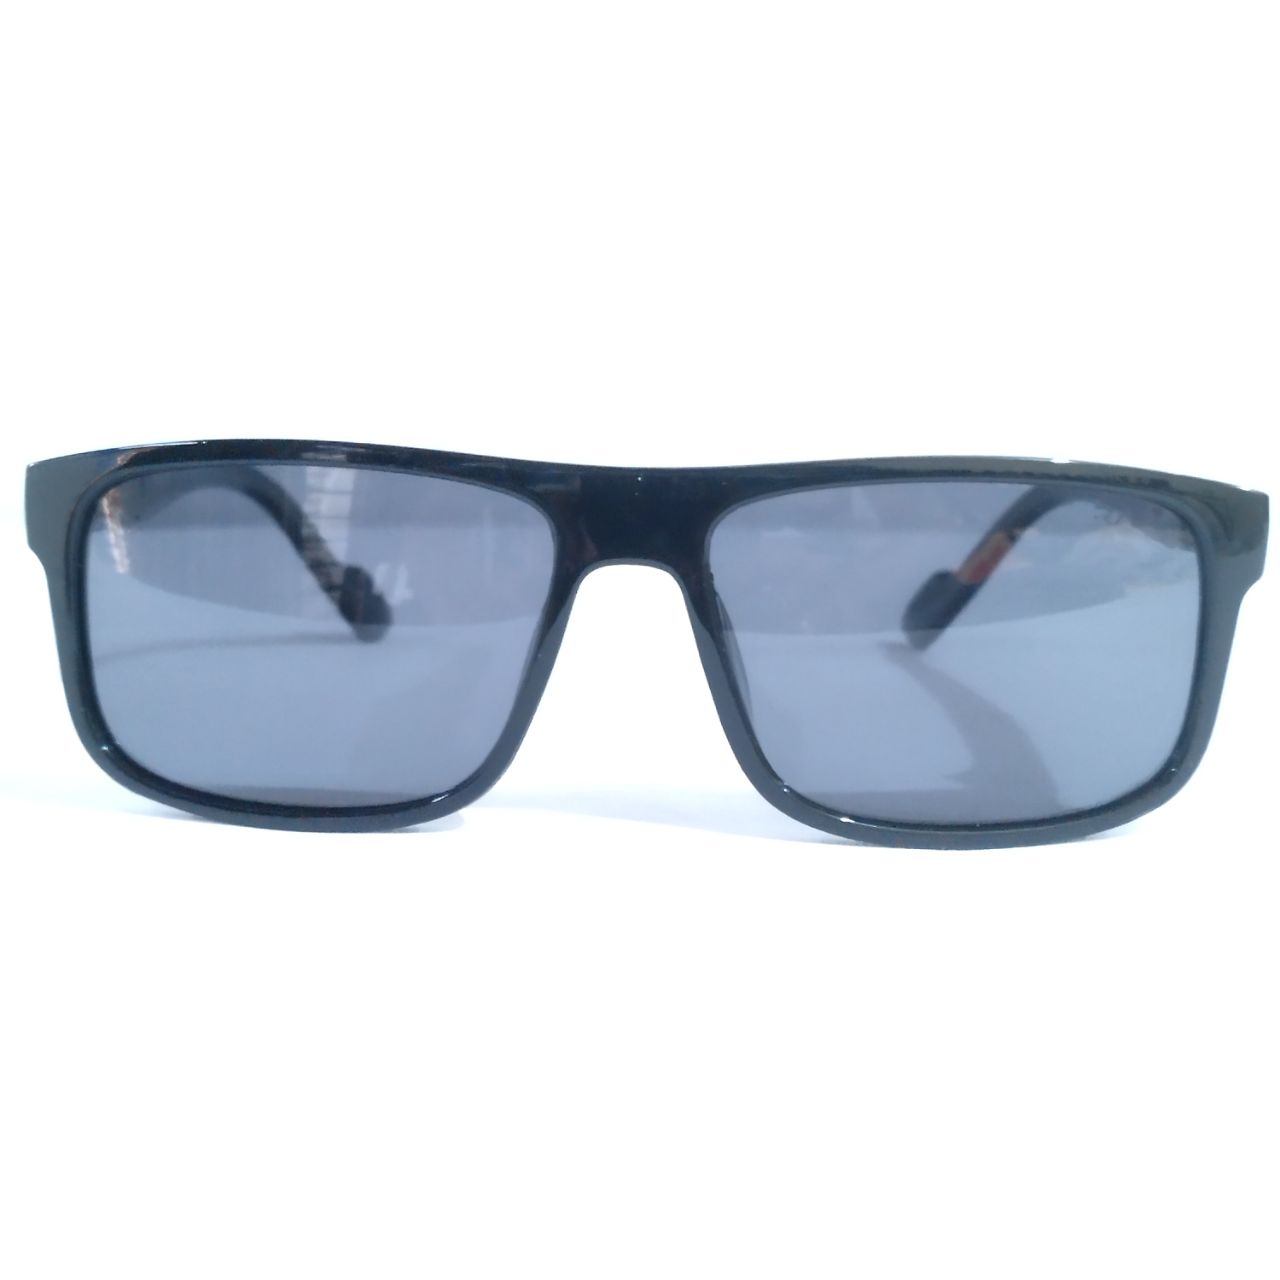 Stylish Black Rectangle Polarized Sunglasses for Men and Women